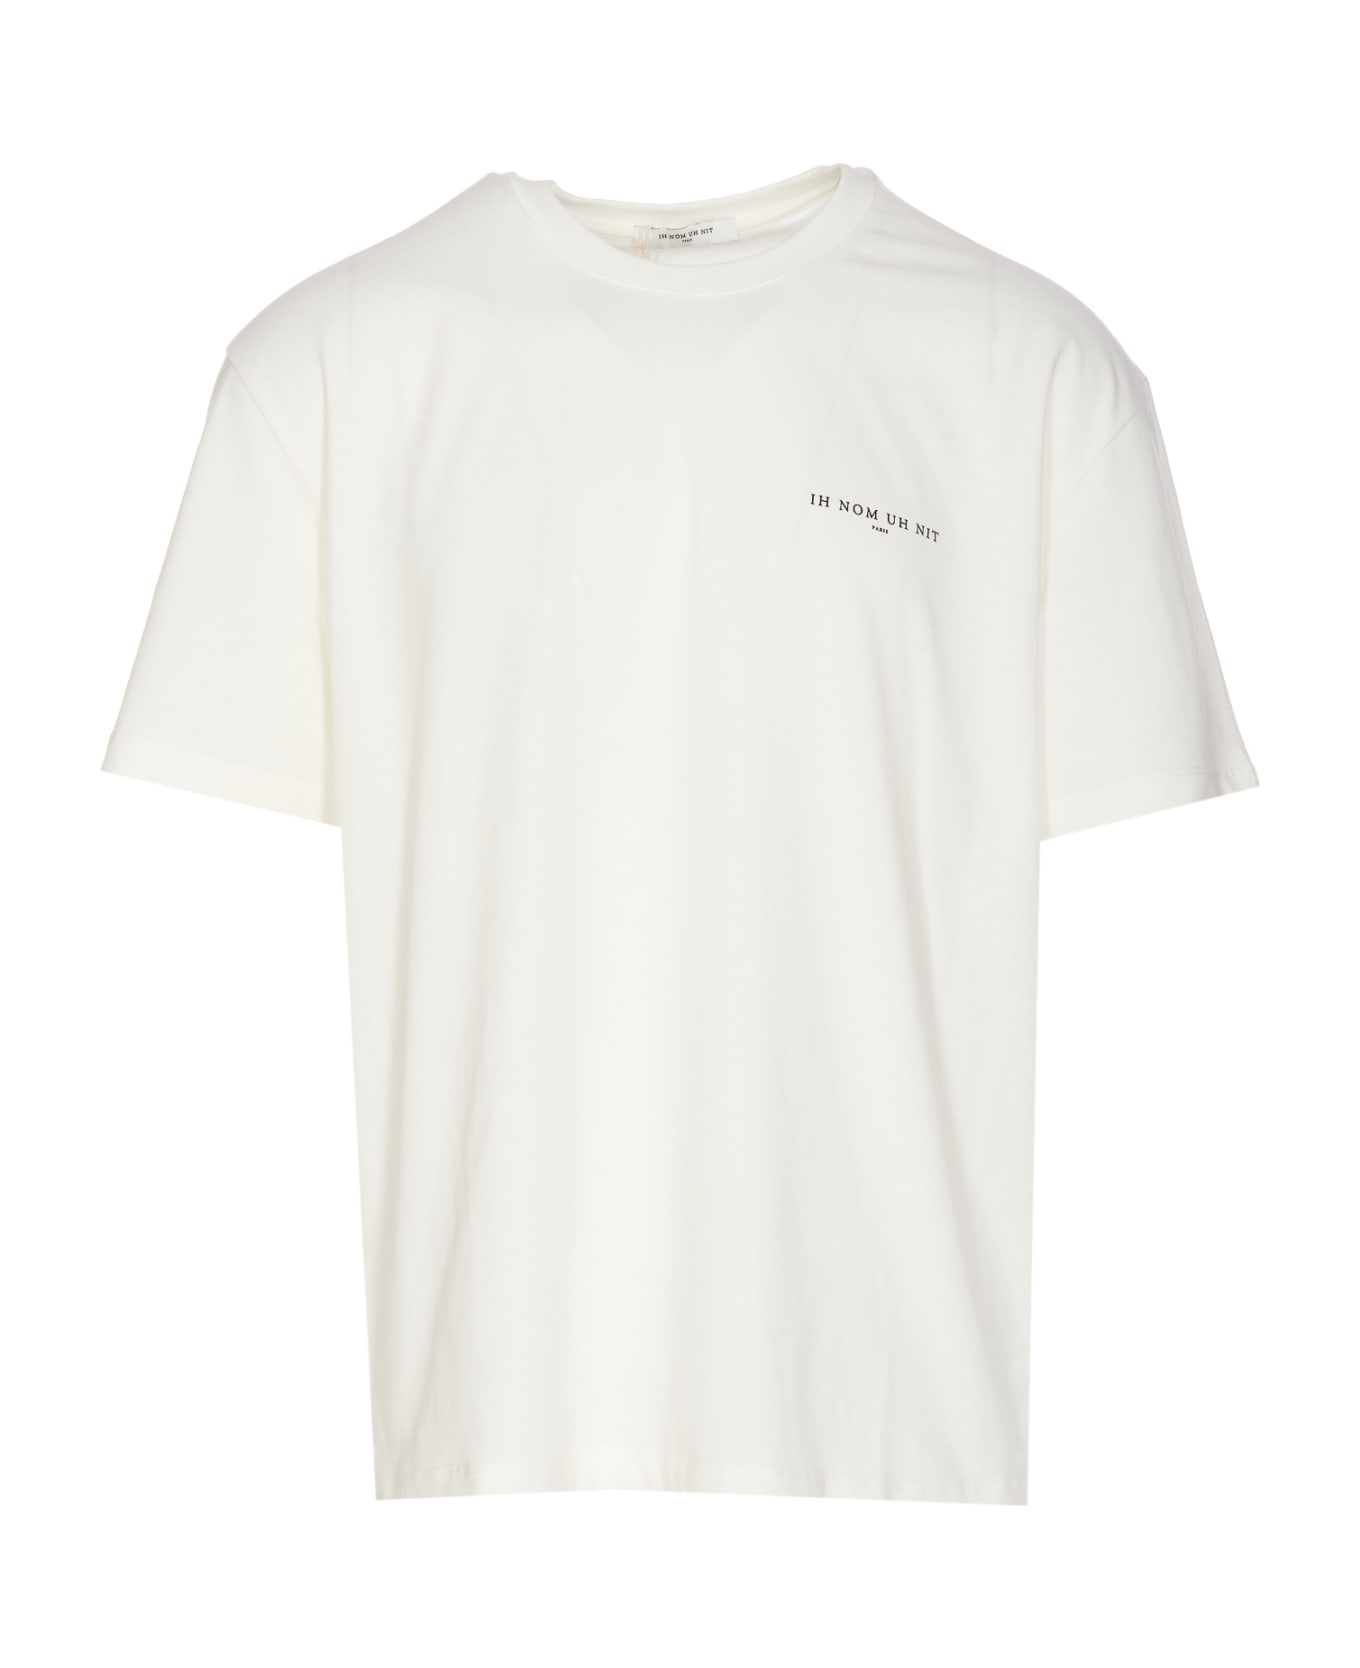 ih nom uh nit Logo T-shirt - White